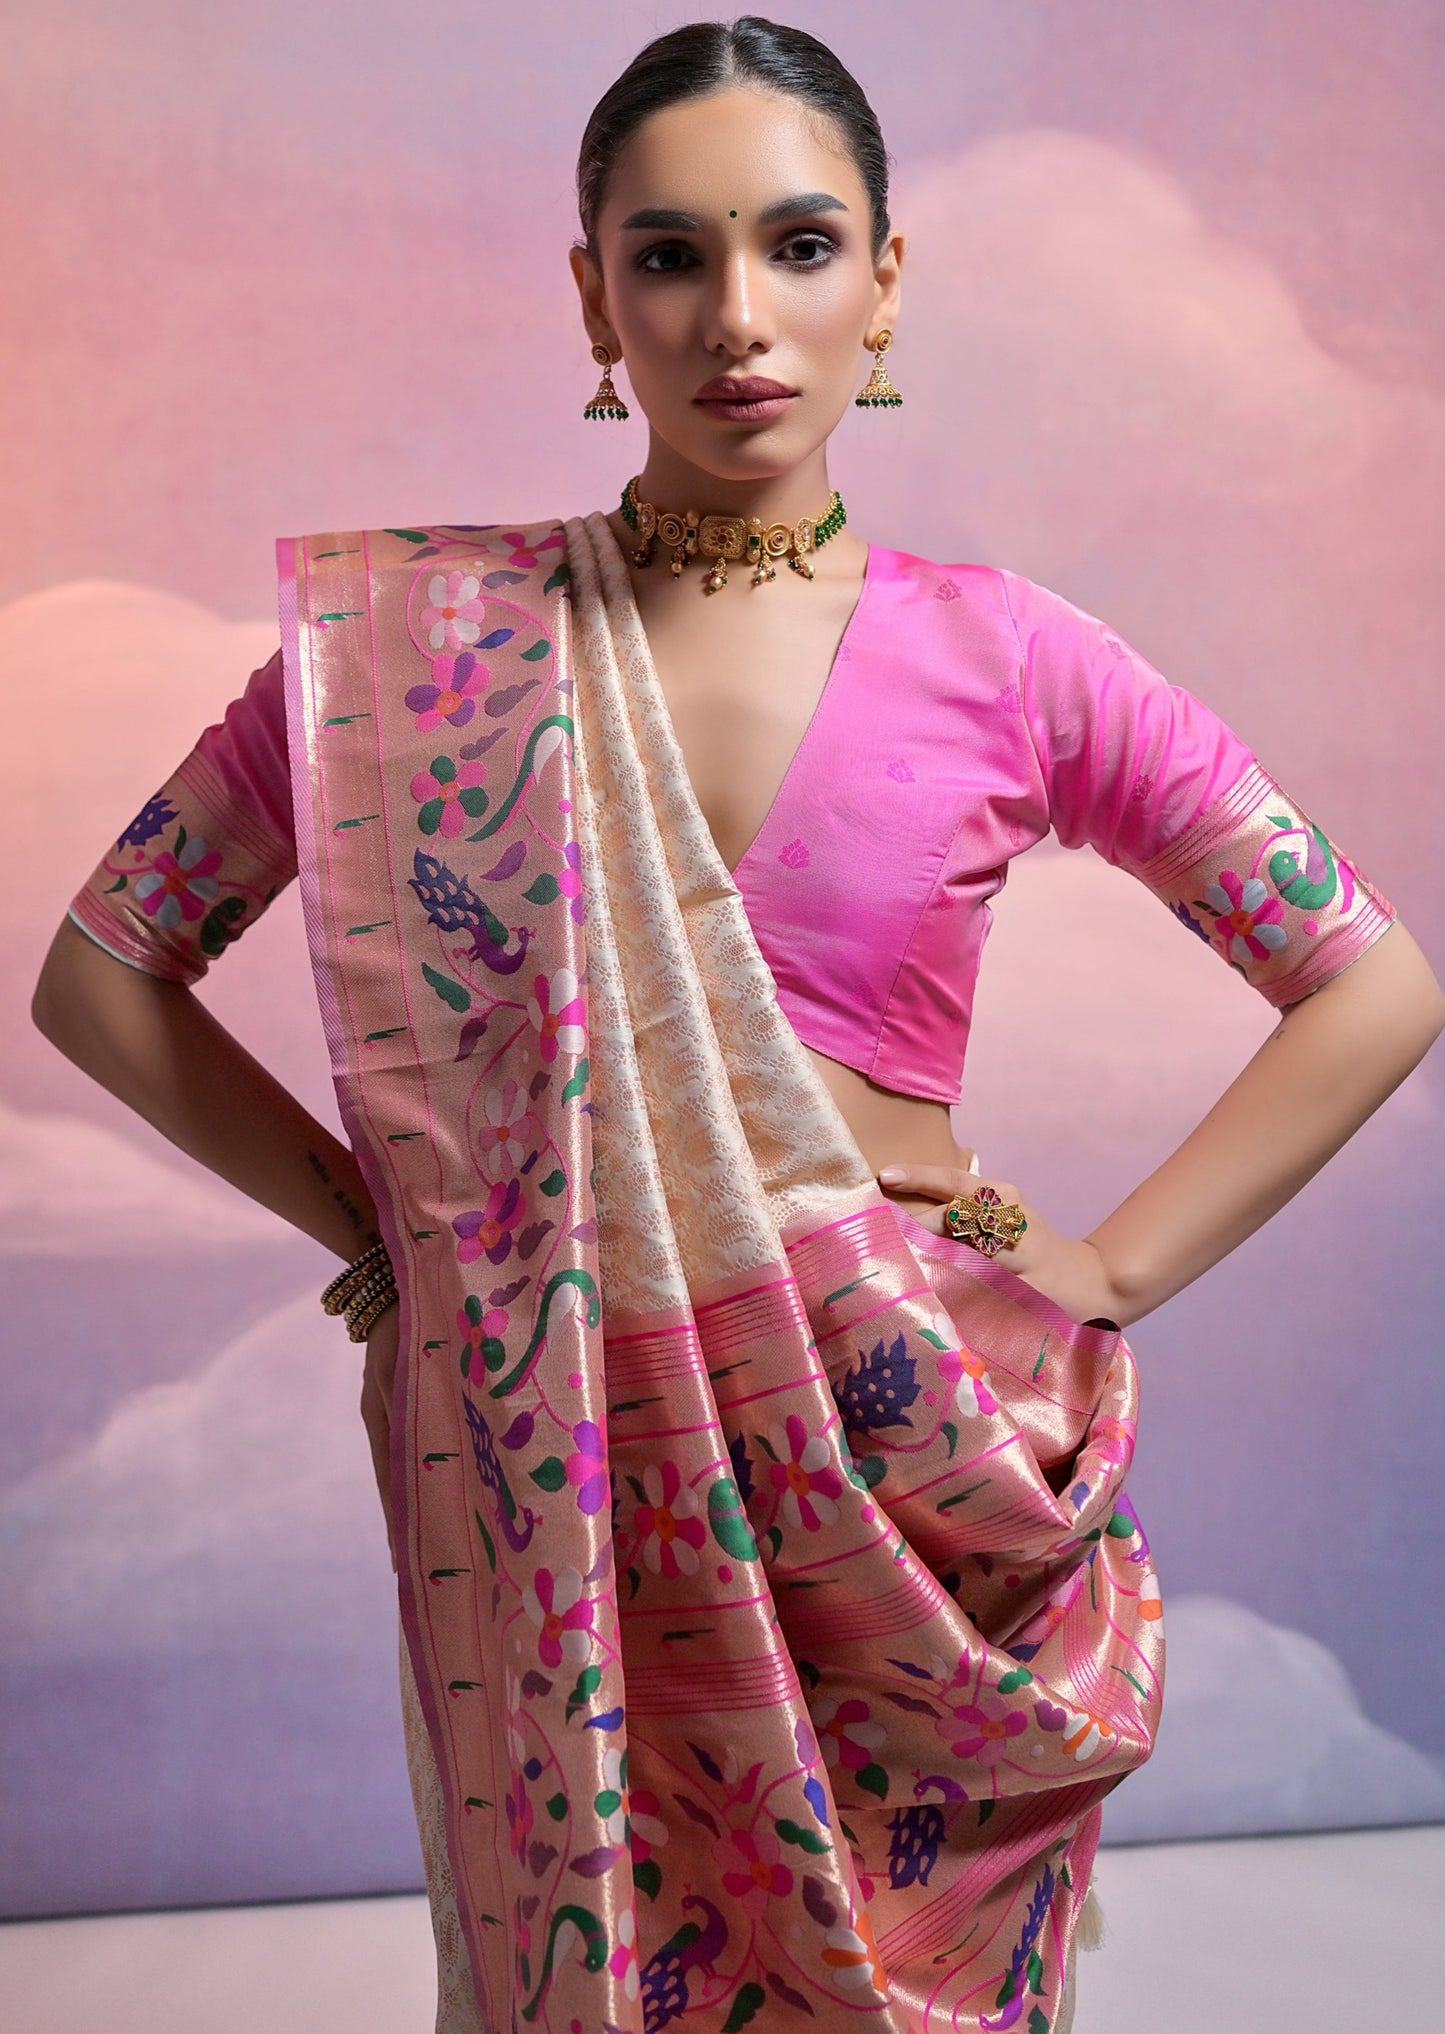 Triple muniya border paithani-silk-off white handloom saree pink blouse.